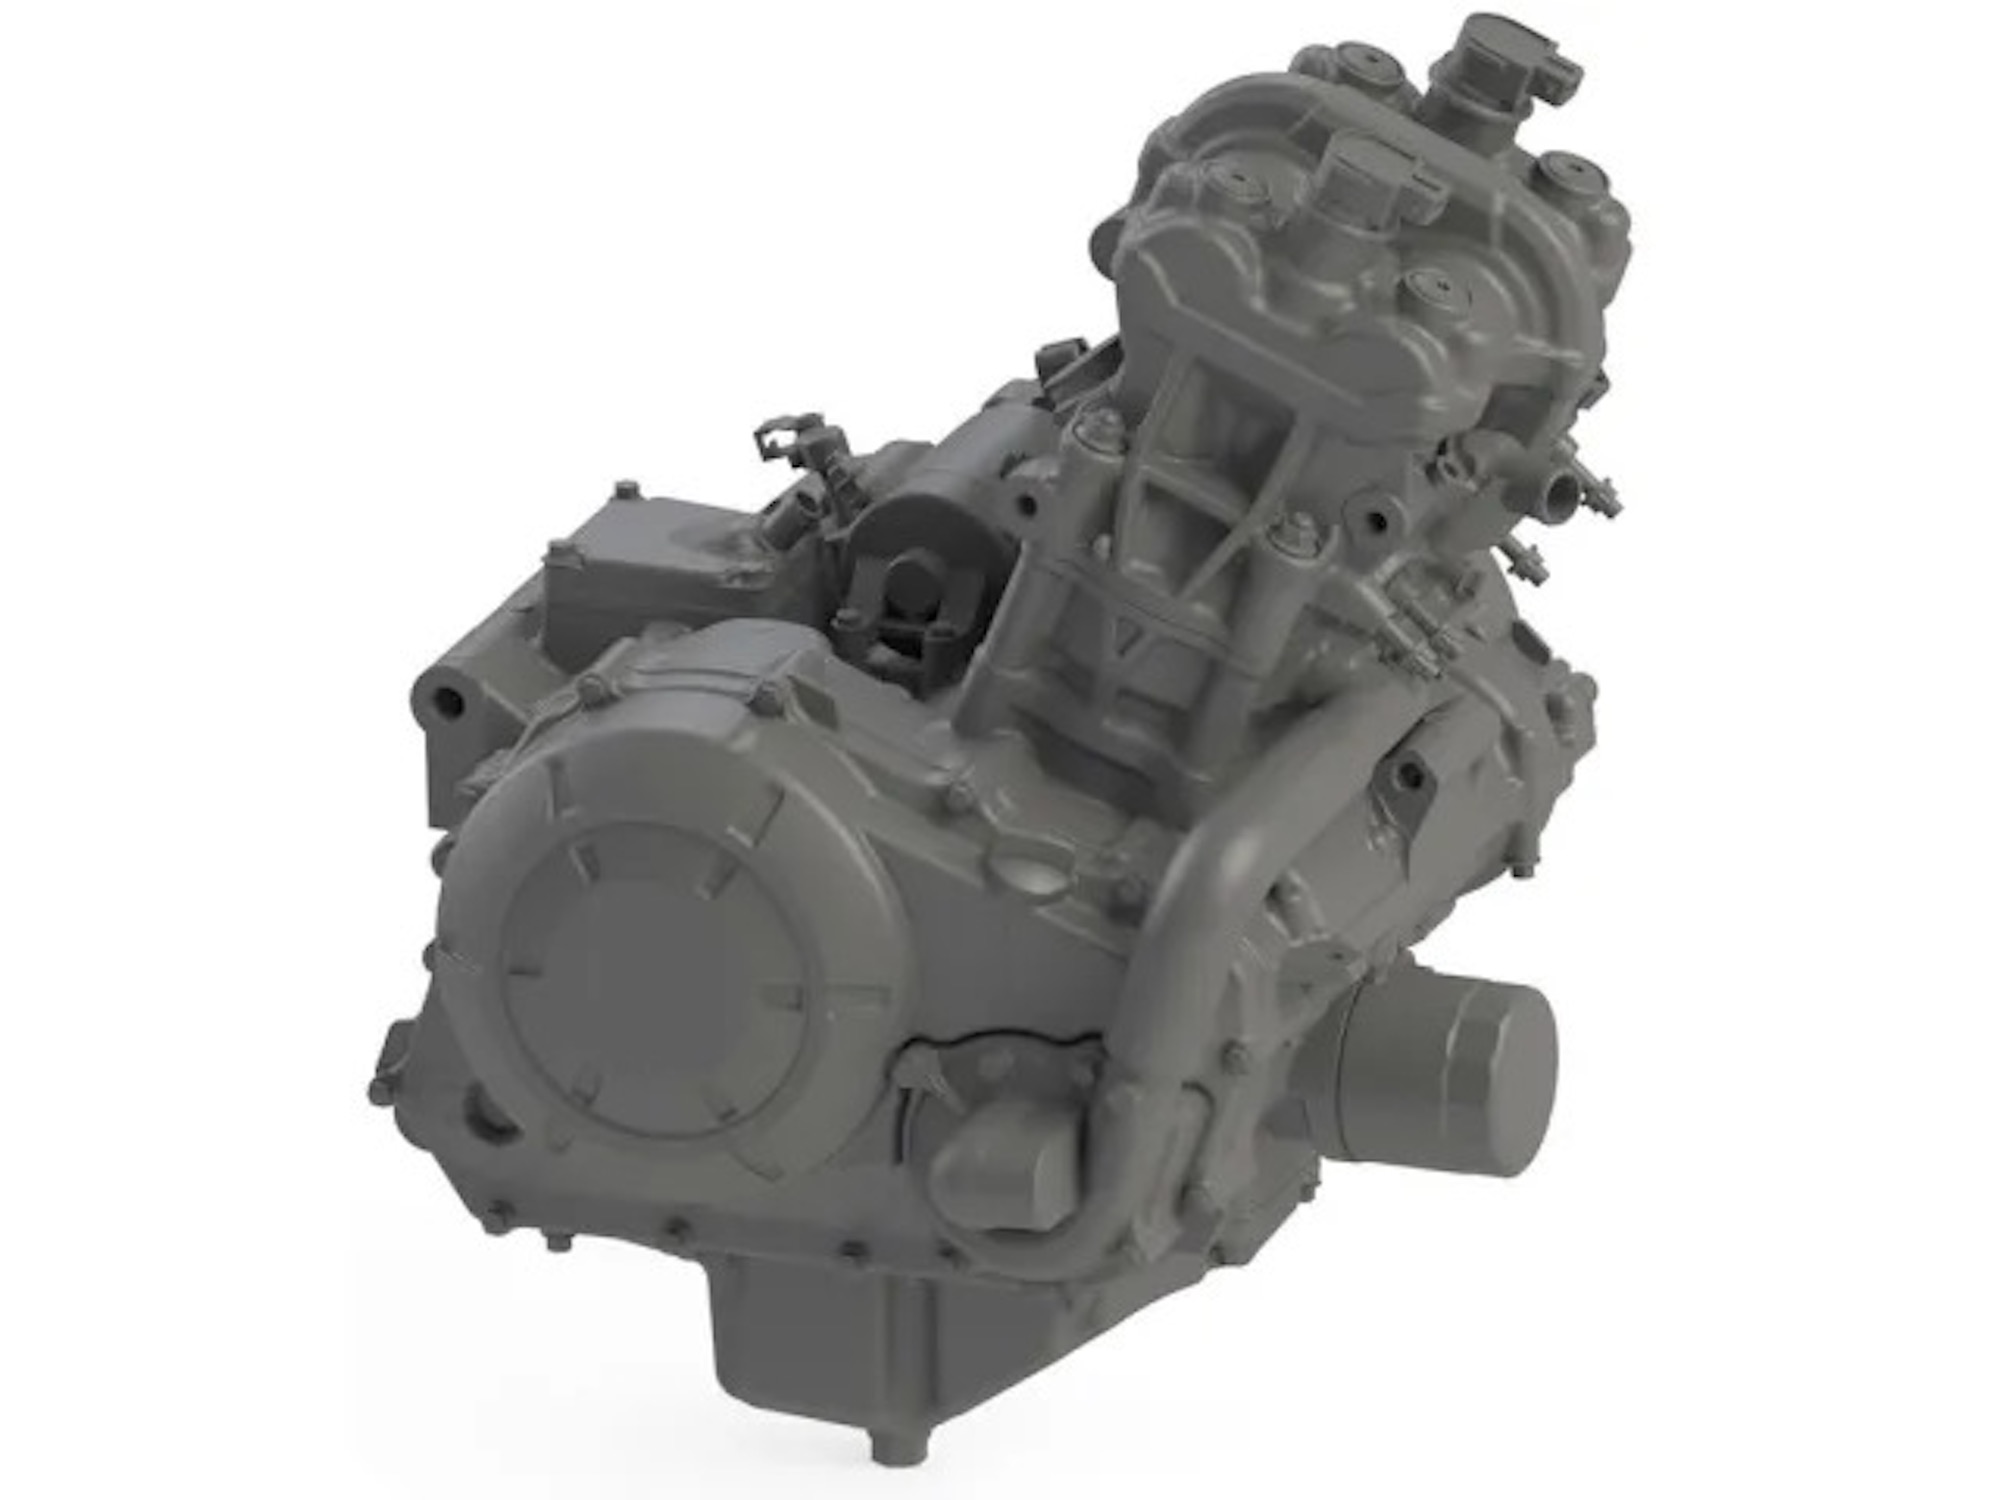 Aprilia's RS250 engine. Media sourced from iMotorbike.